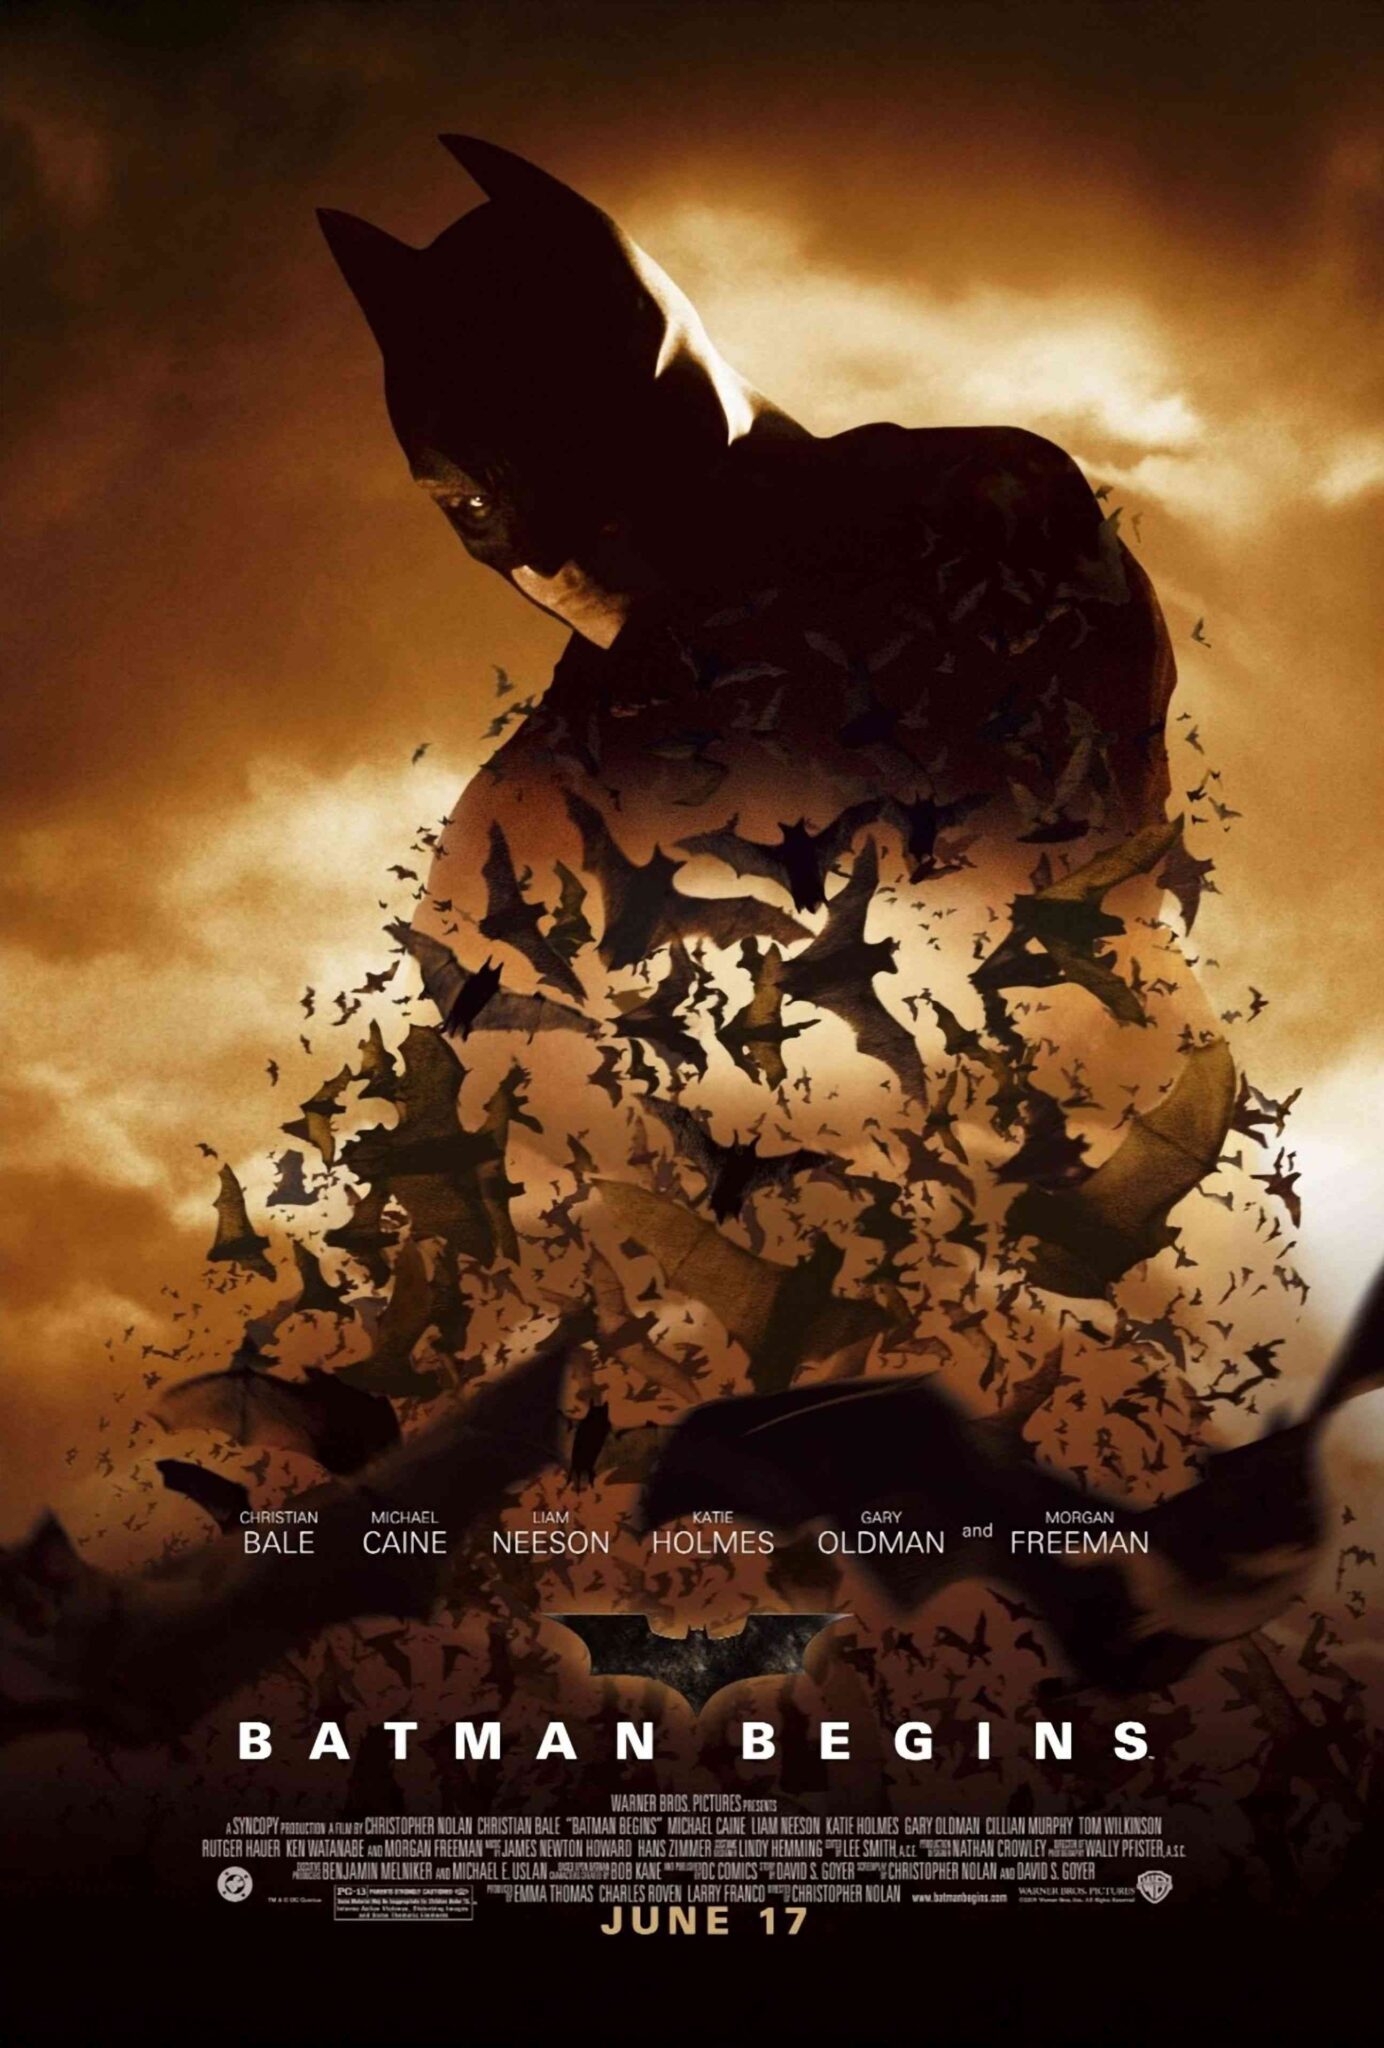 FULL MOVIE: Batman Begins (2005)